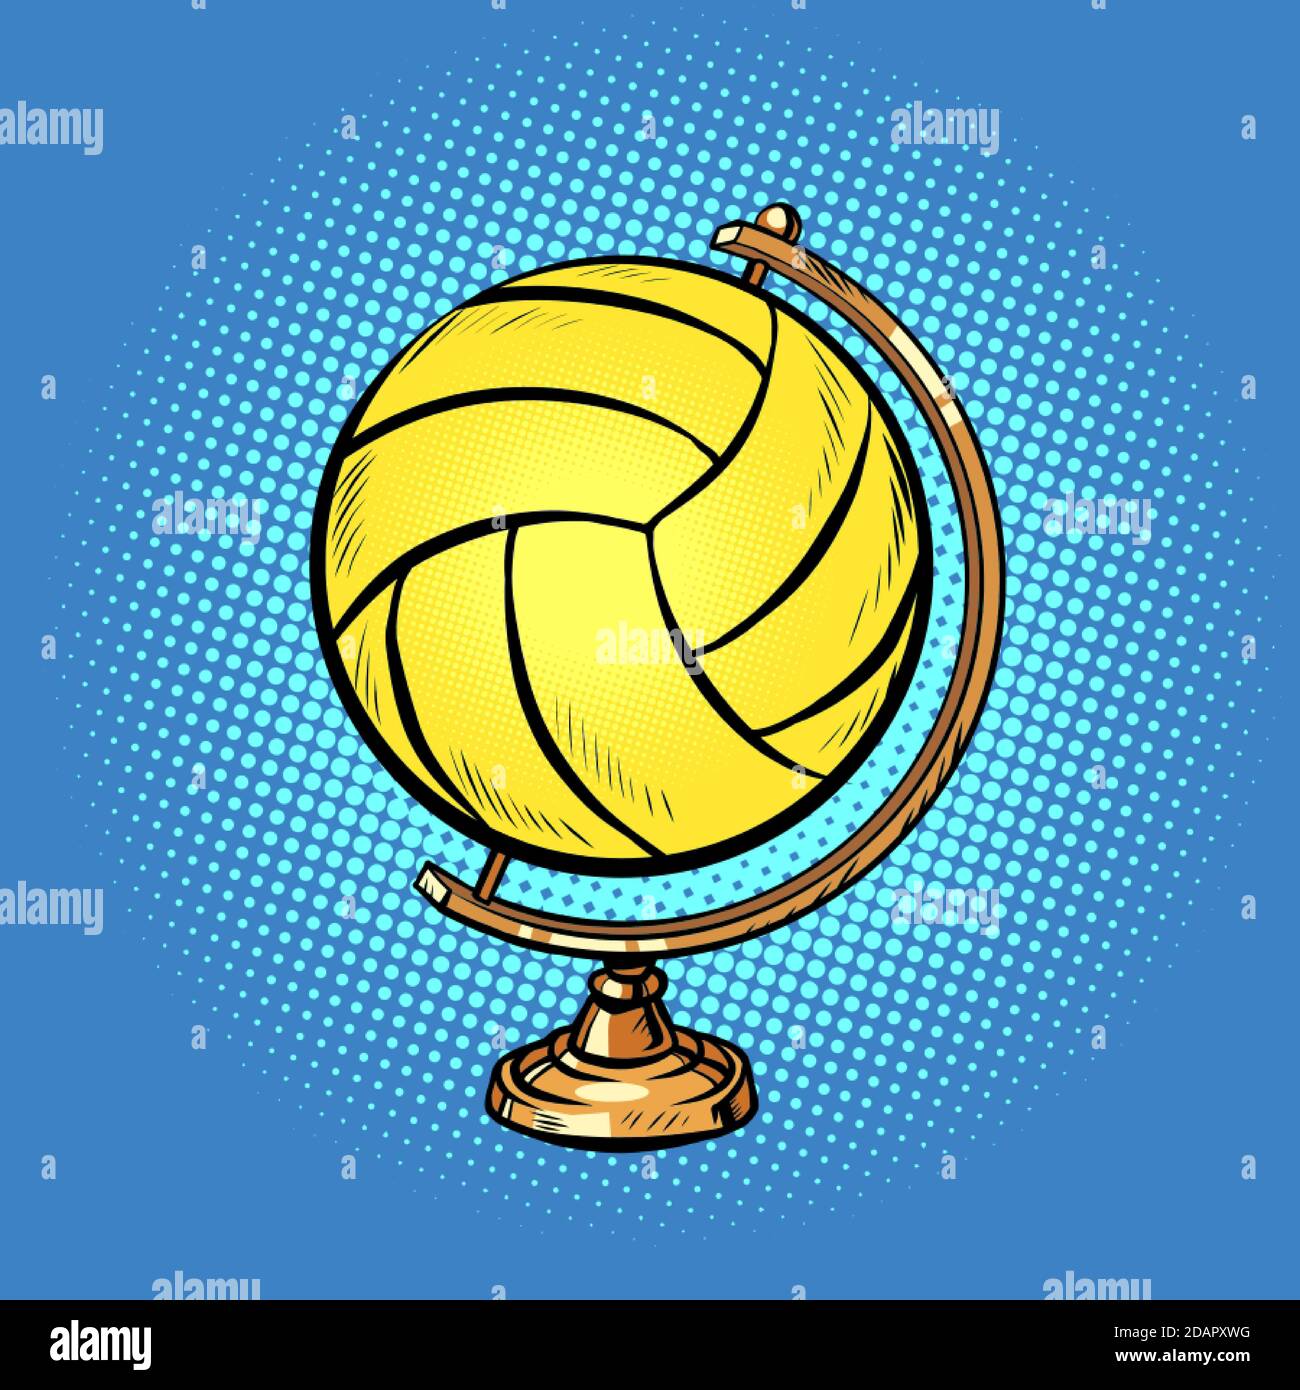 globe international volleyball ball sports equipment Stock Vector